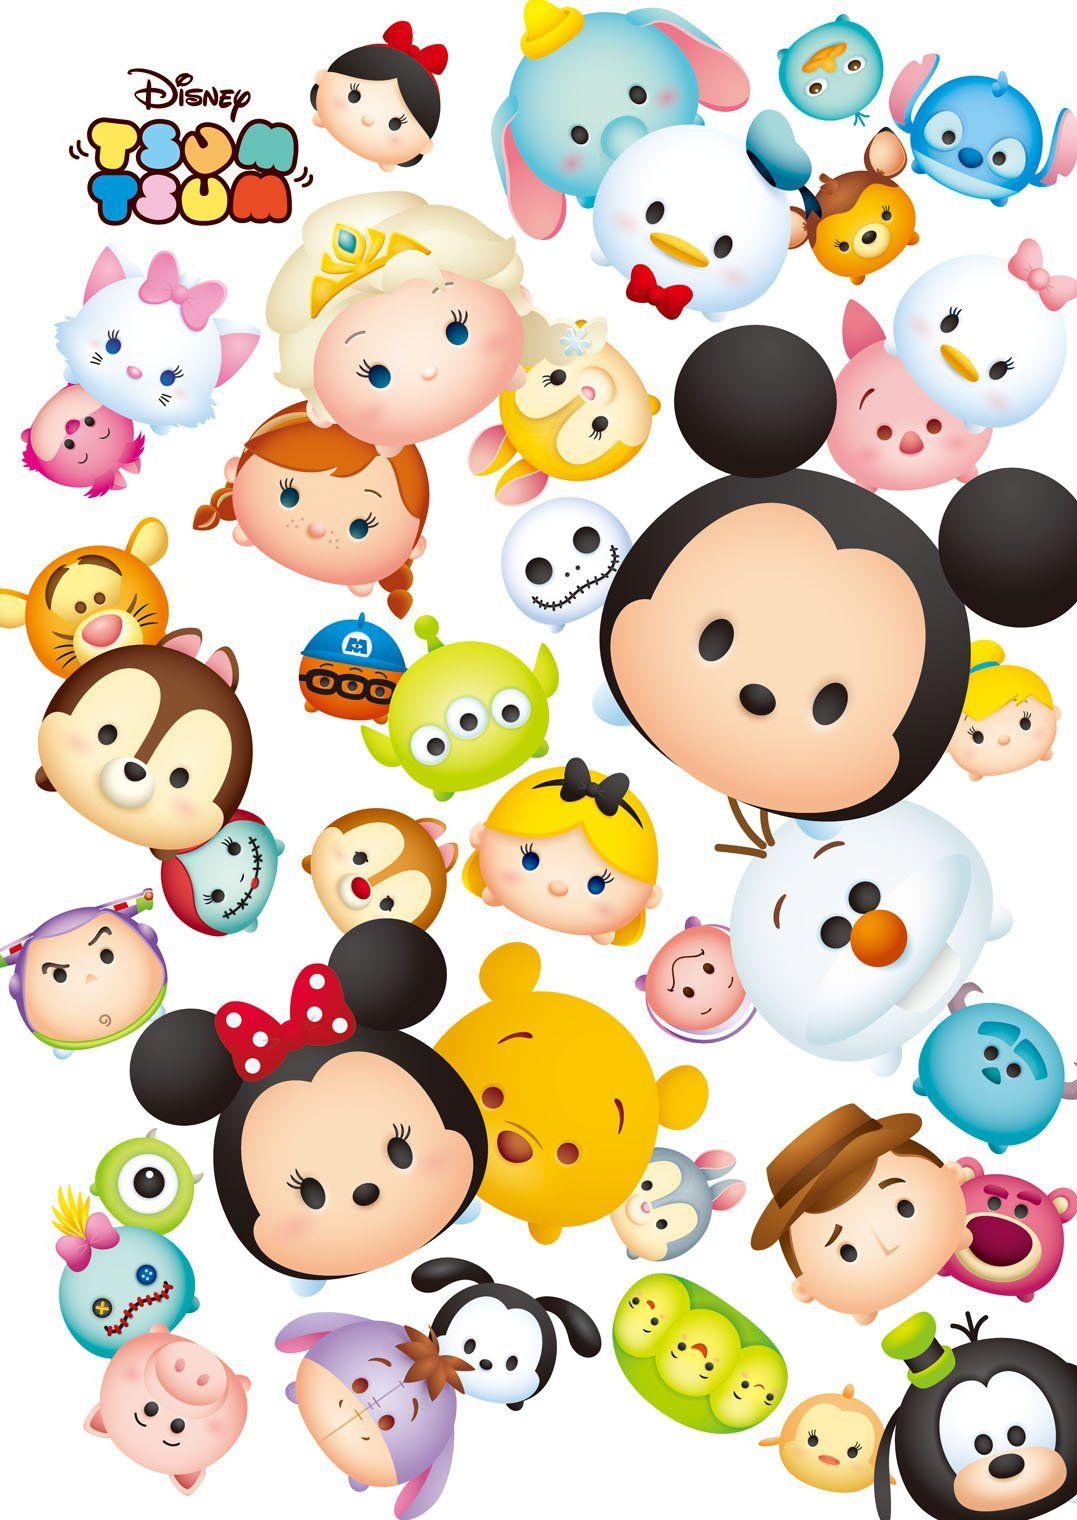 Disney Tsum Tsum Wallpapers Top Free Disney Tsum Tsum Backgrounds Wallpaperaccess